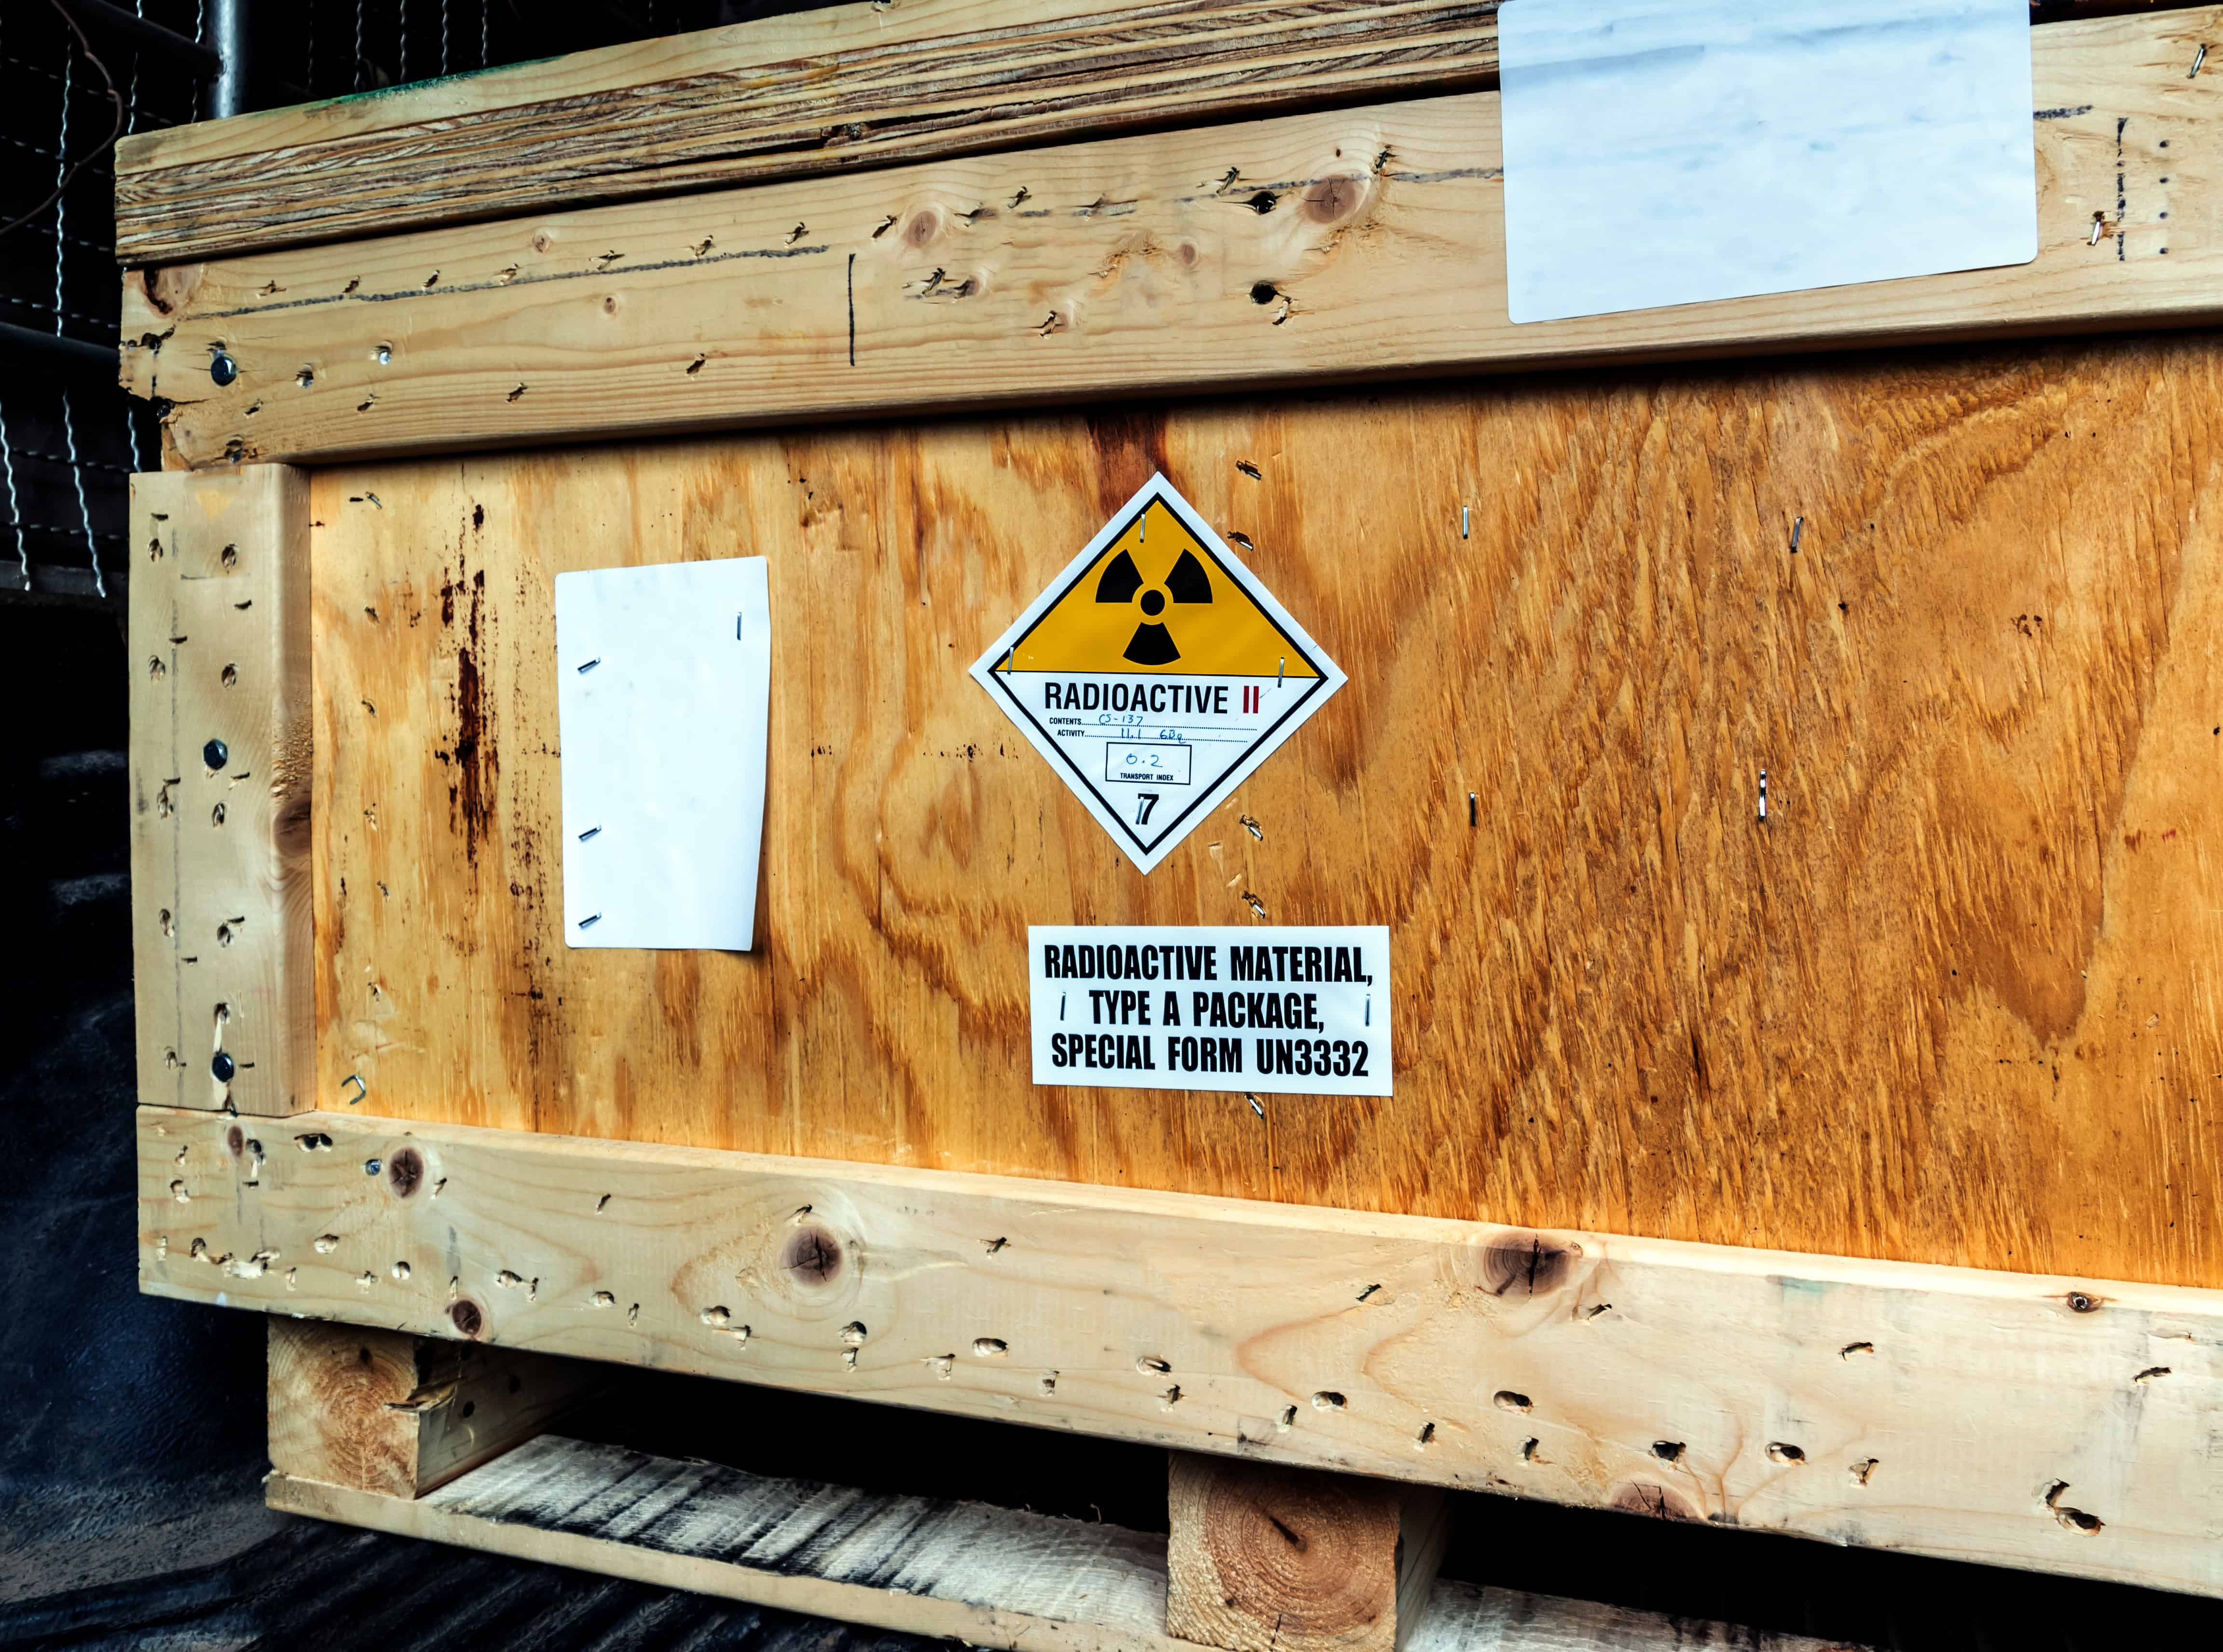 Radiation label